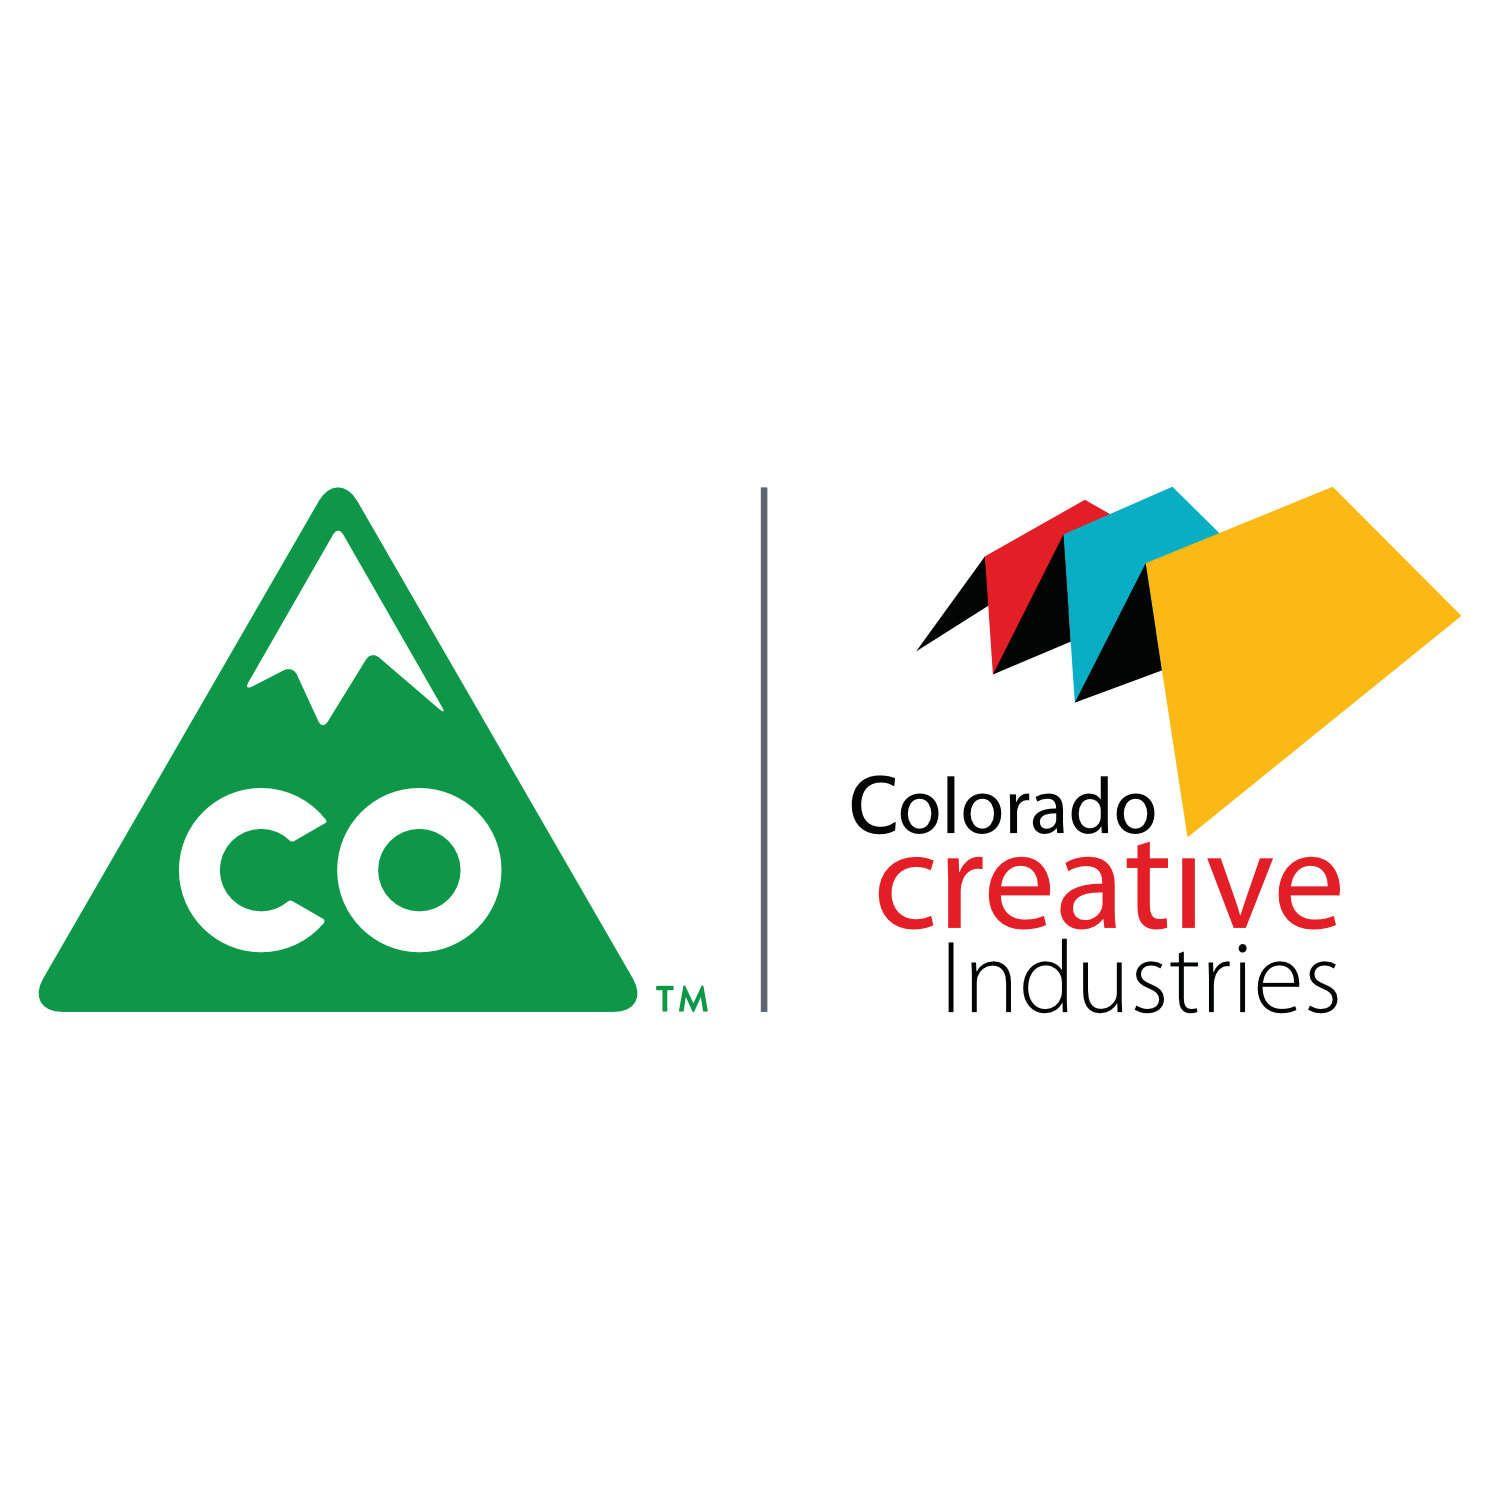 Colorado Corporate Logo - Corporate Giving. Colorado Music Festival and Center for Musical